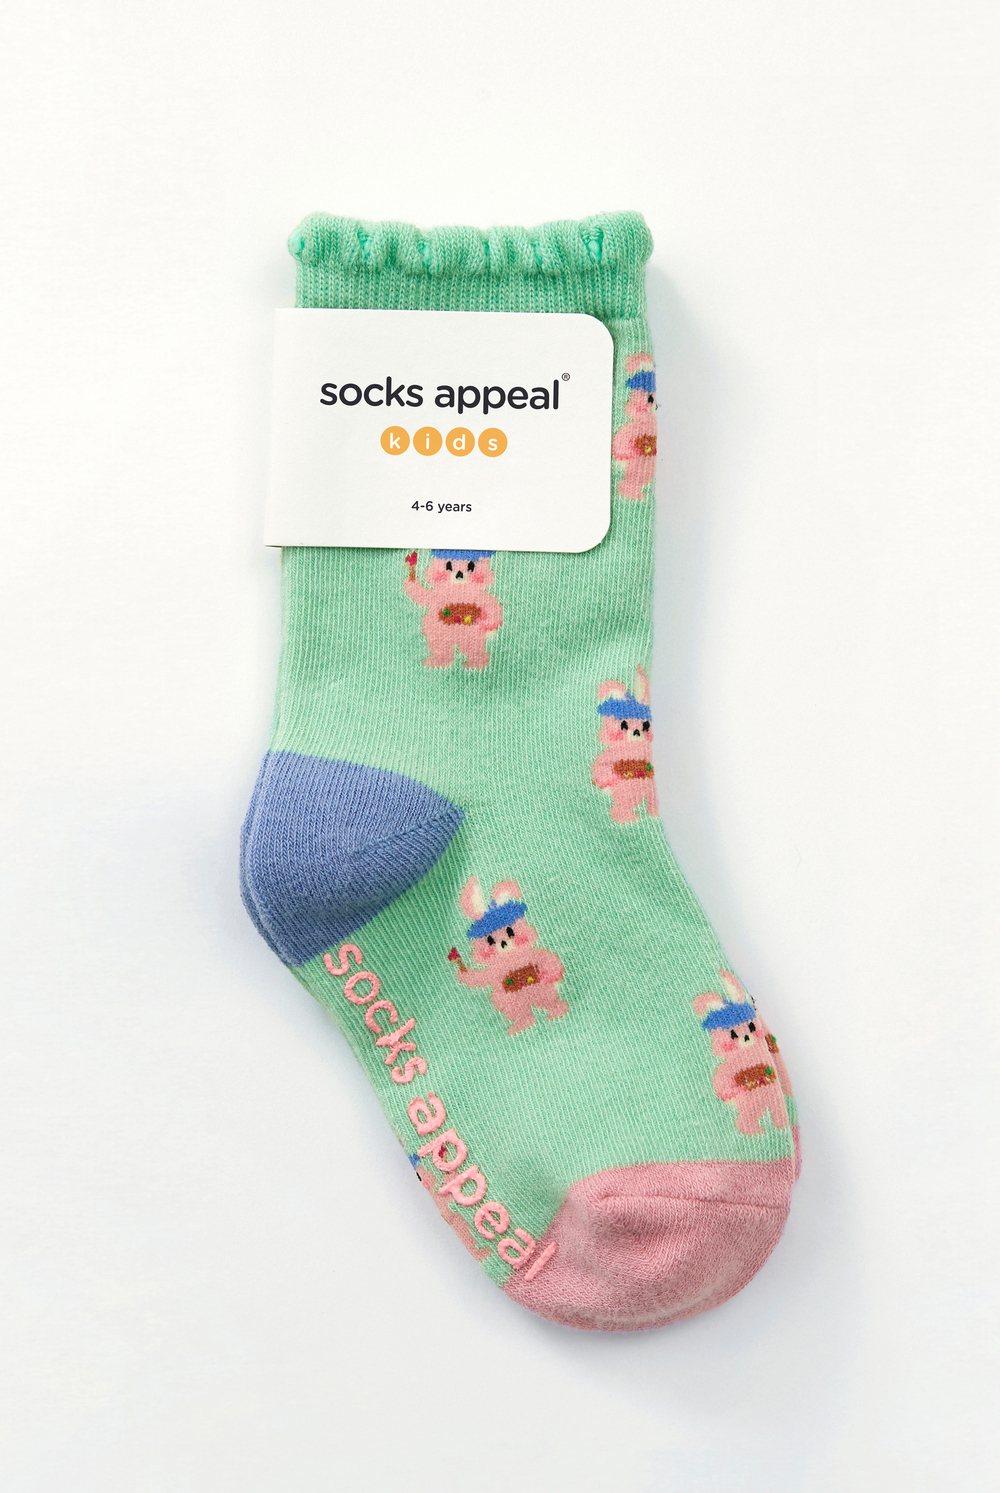 socks mint color image-S1L8